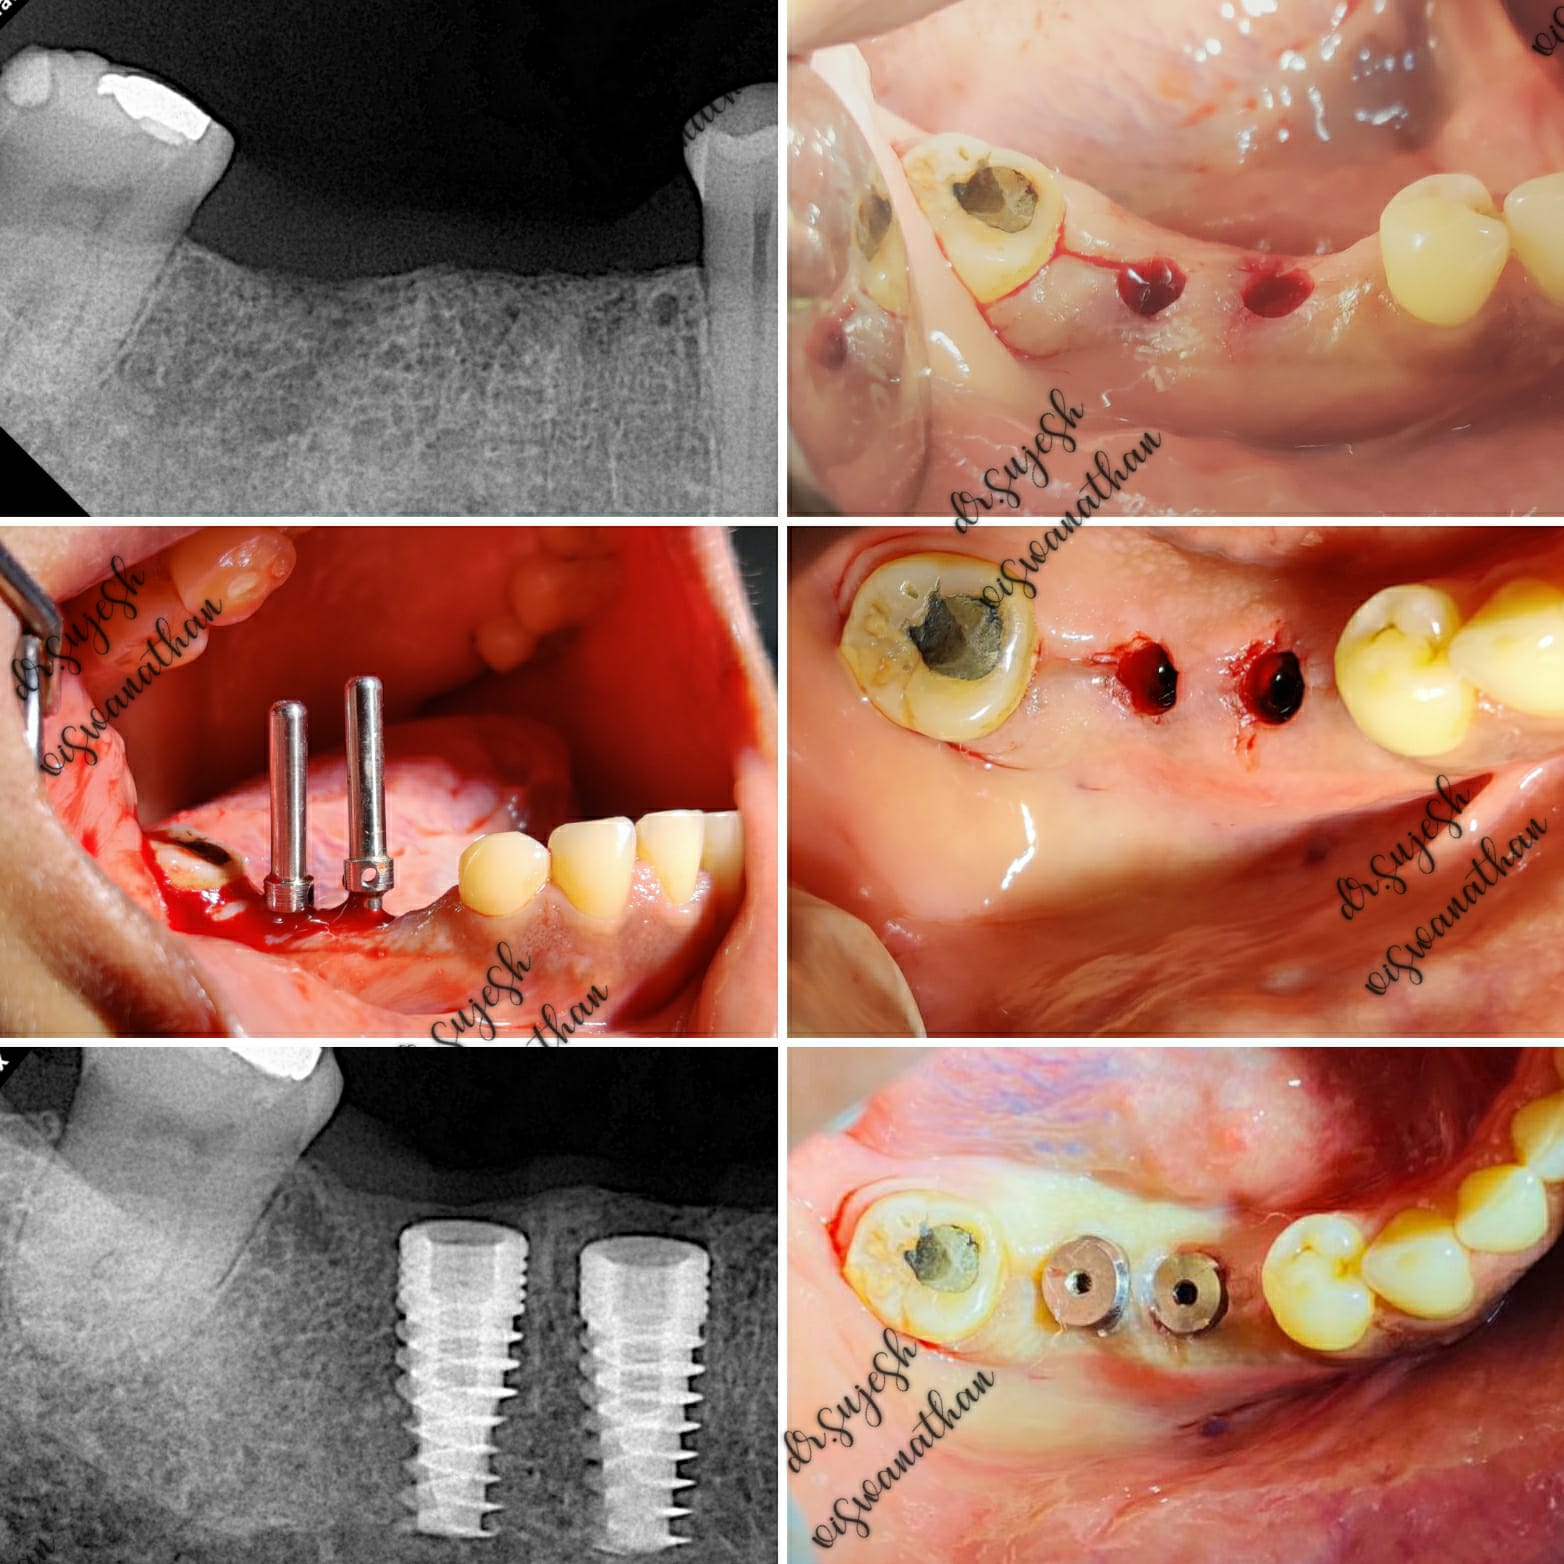 Maxillofacial dental clinic